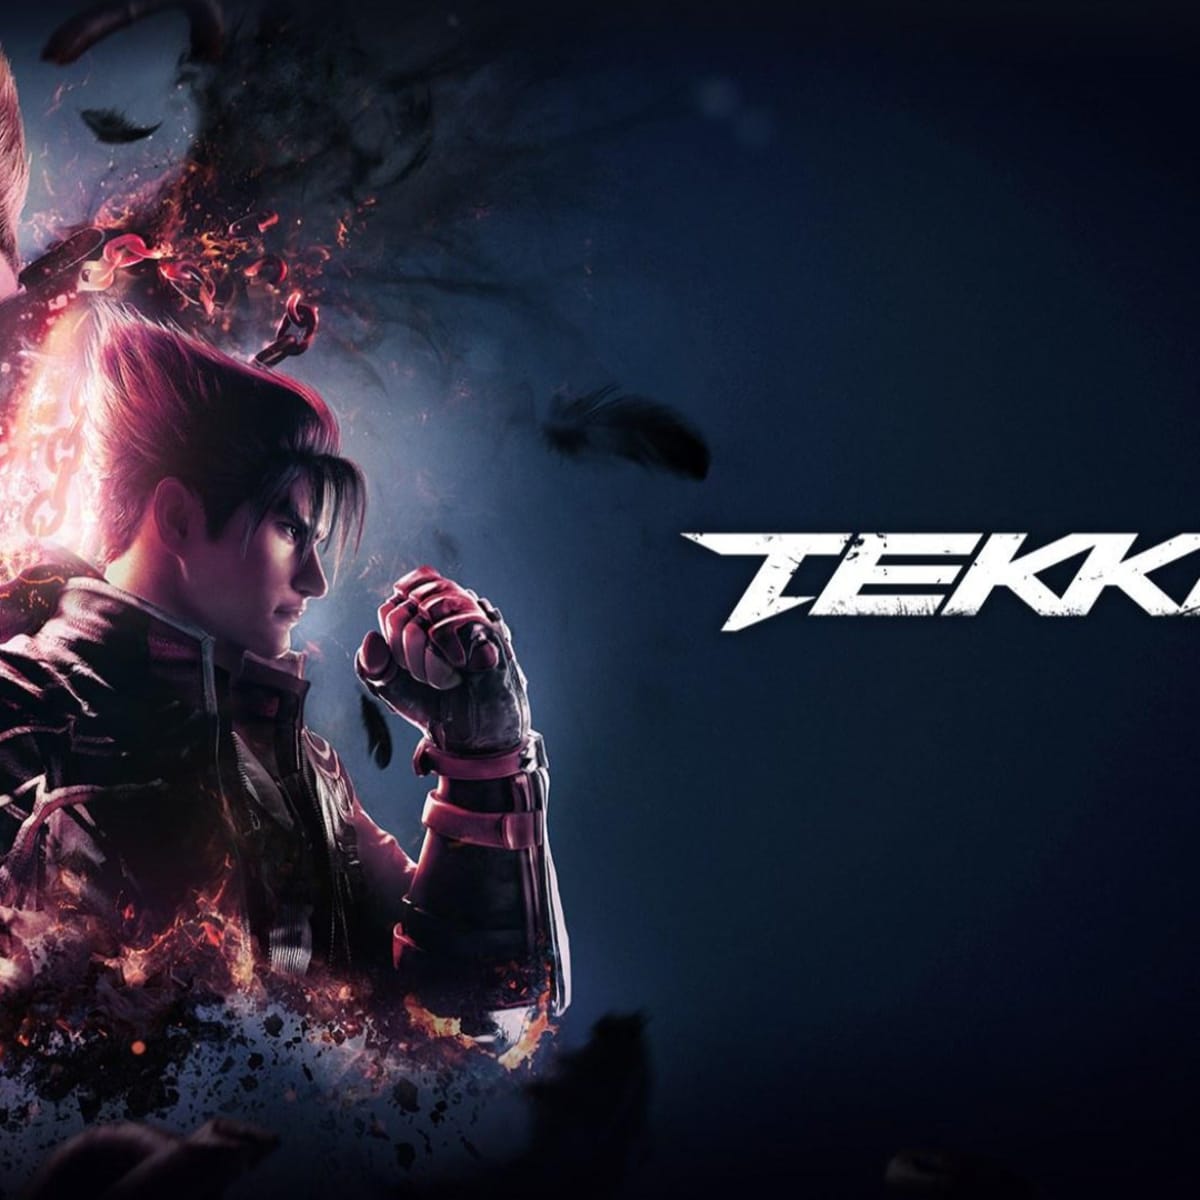 TEKKEN 8 - PS5 And Xbox Series X Key Art : r/Tekken